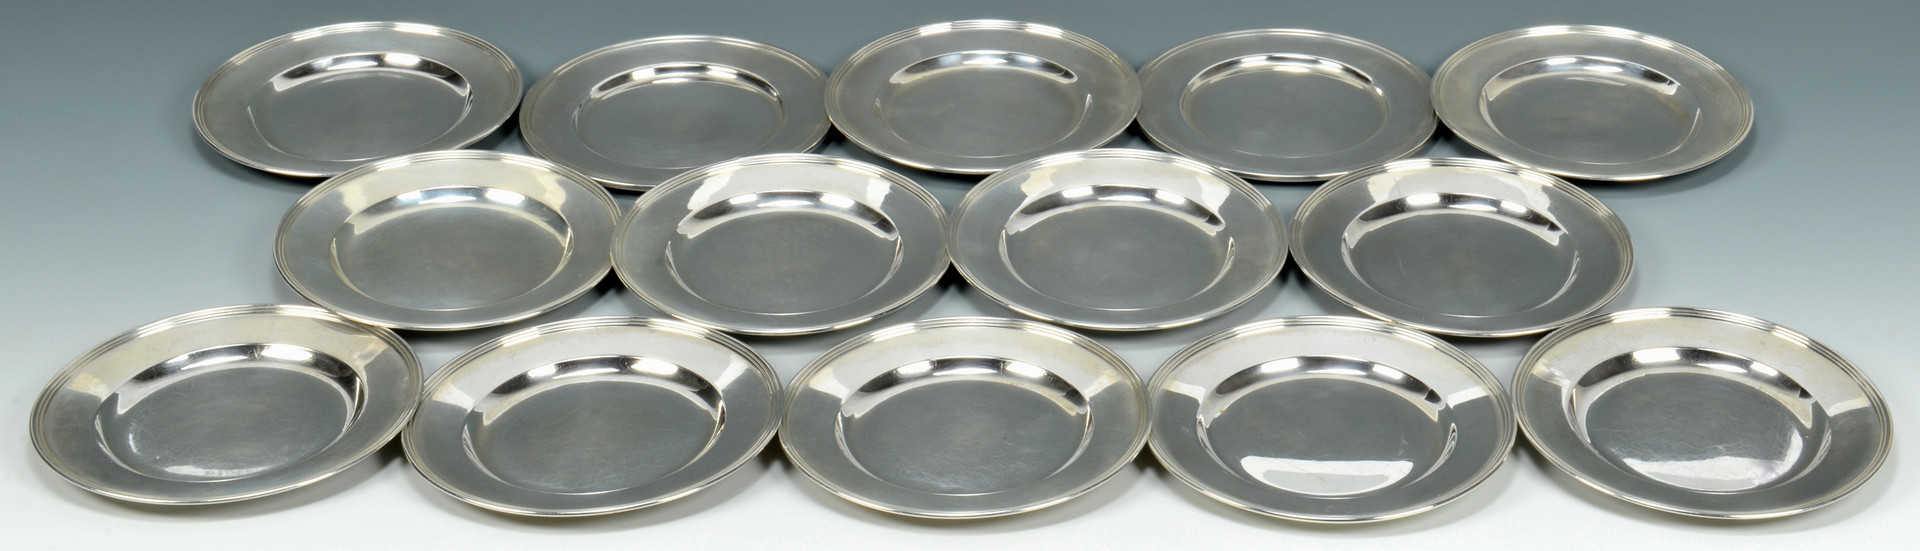 Lot 689: 14 Sterling Silver Bread Plates